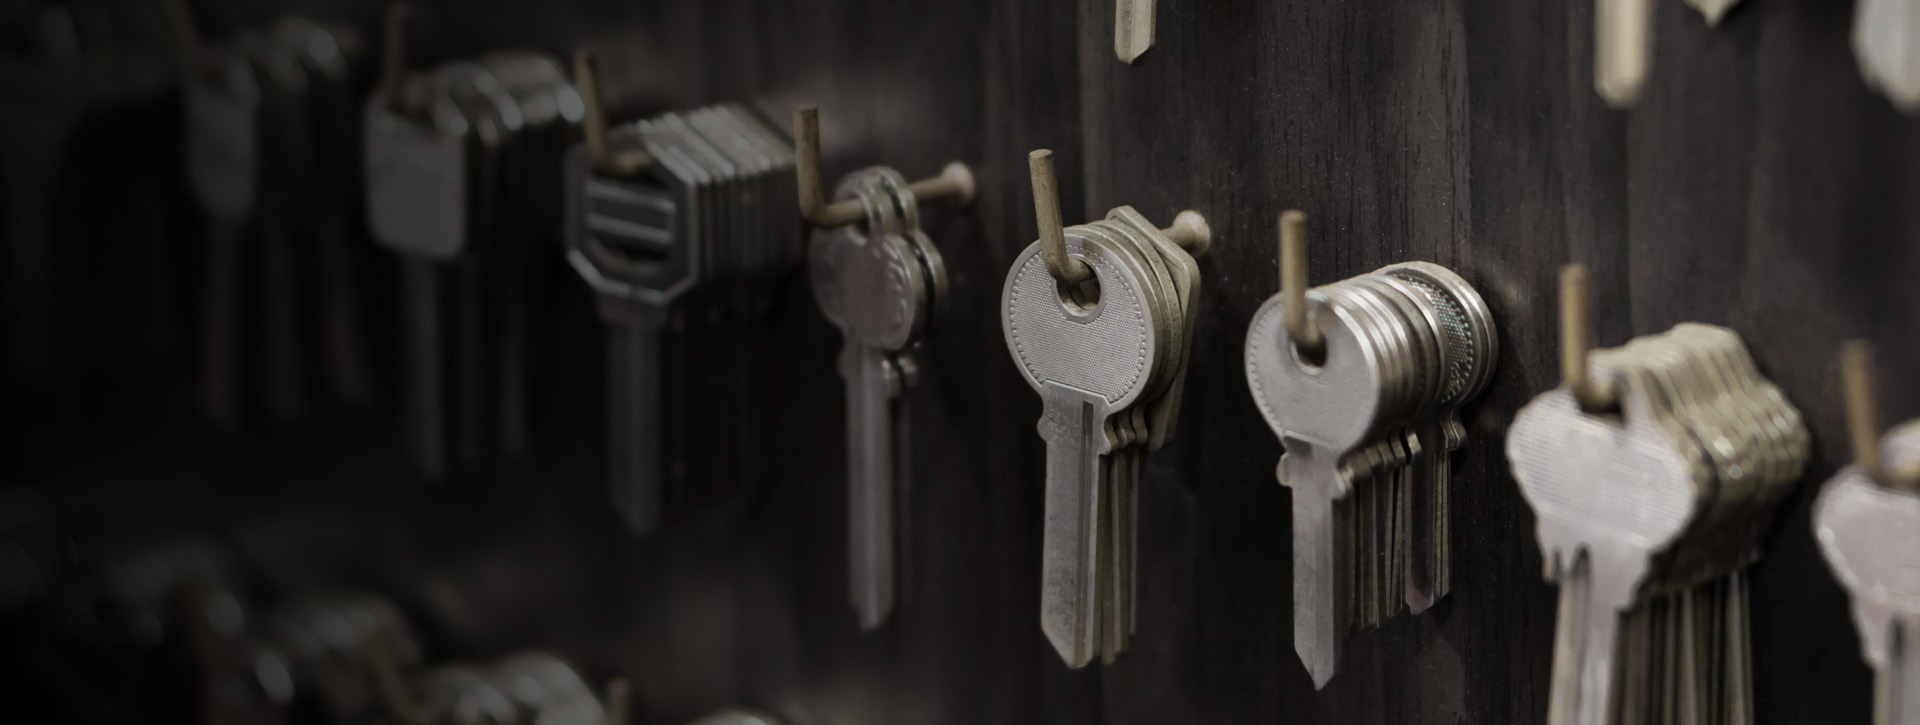 locksmith london ontario safes